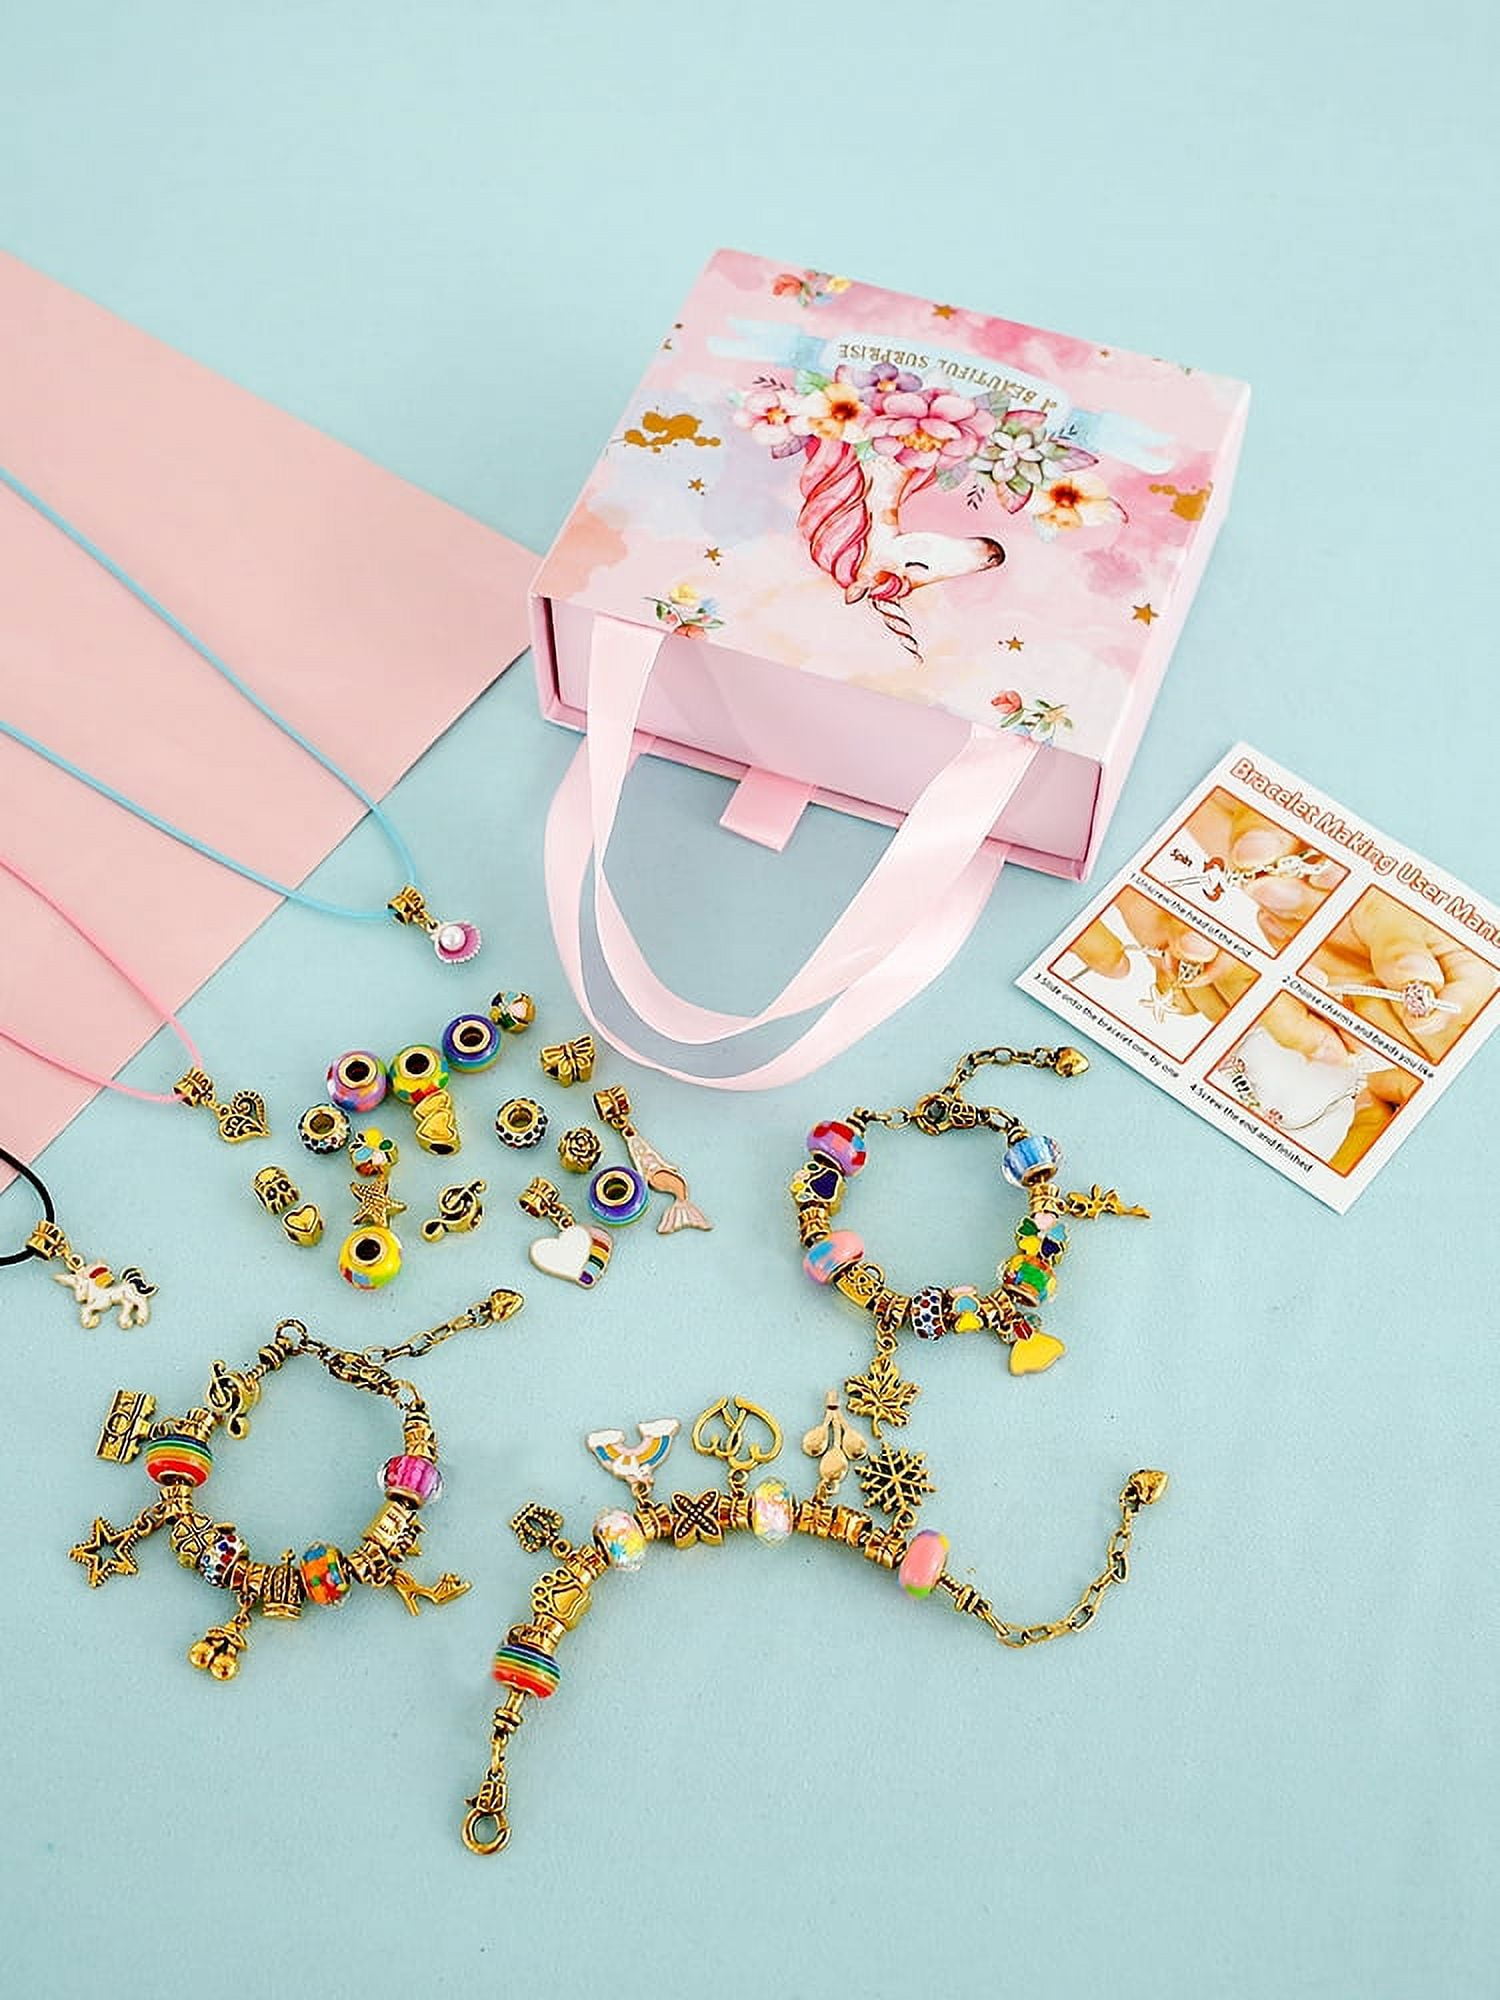 Tcwhniev Charm Bracelet Making Kit, Jewellery Making Kit for Girls Gorgeous  Rainbow Beads/Mermaid Crafts Gifts Set,Jewelry Making DIY Necklaces  Bracelets Headbands Craft Set with Gift Box(67PCS) 